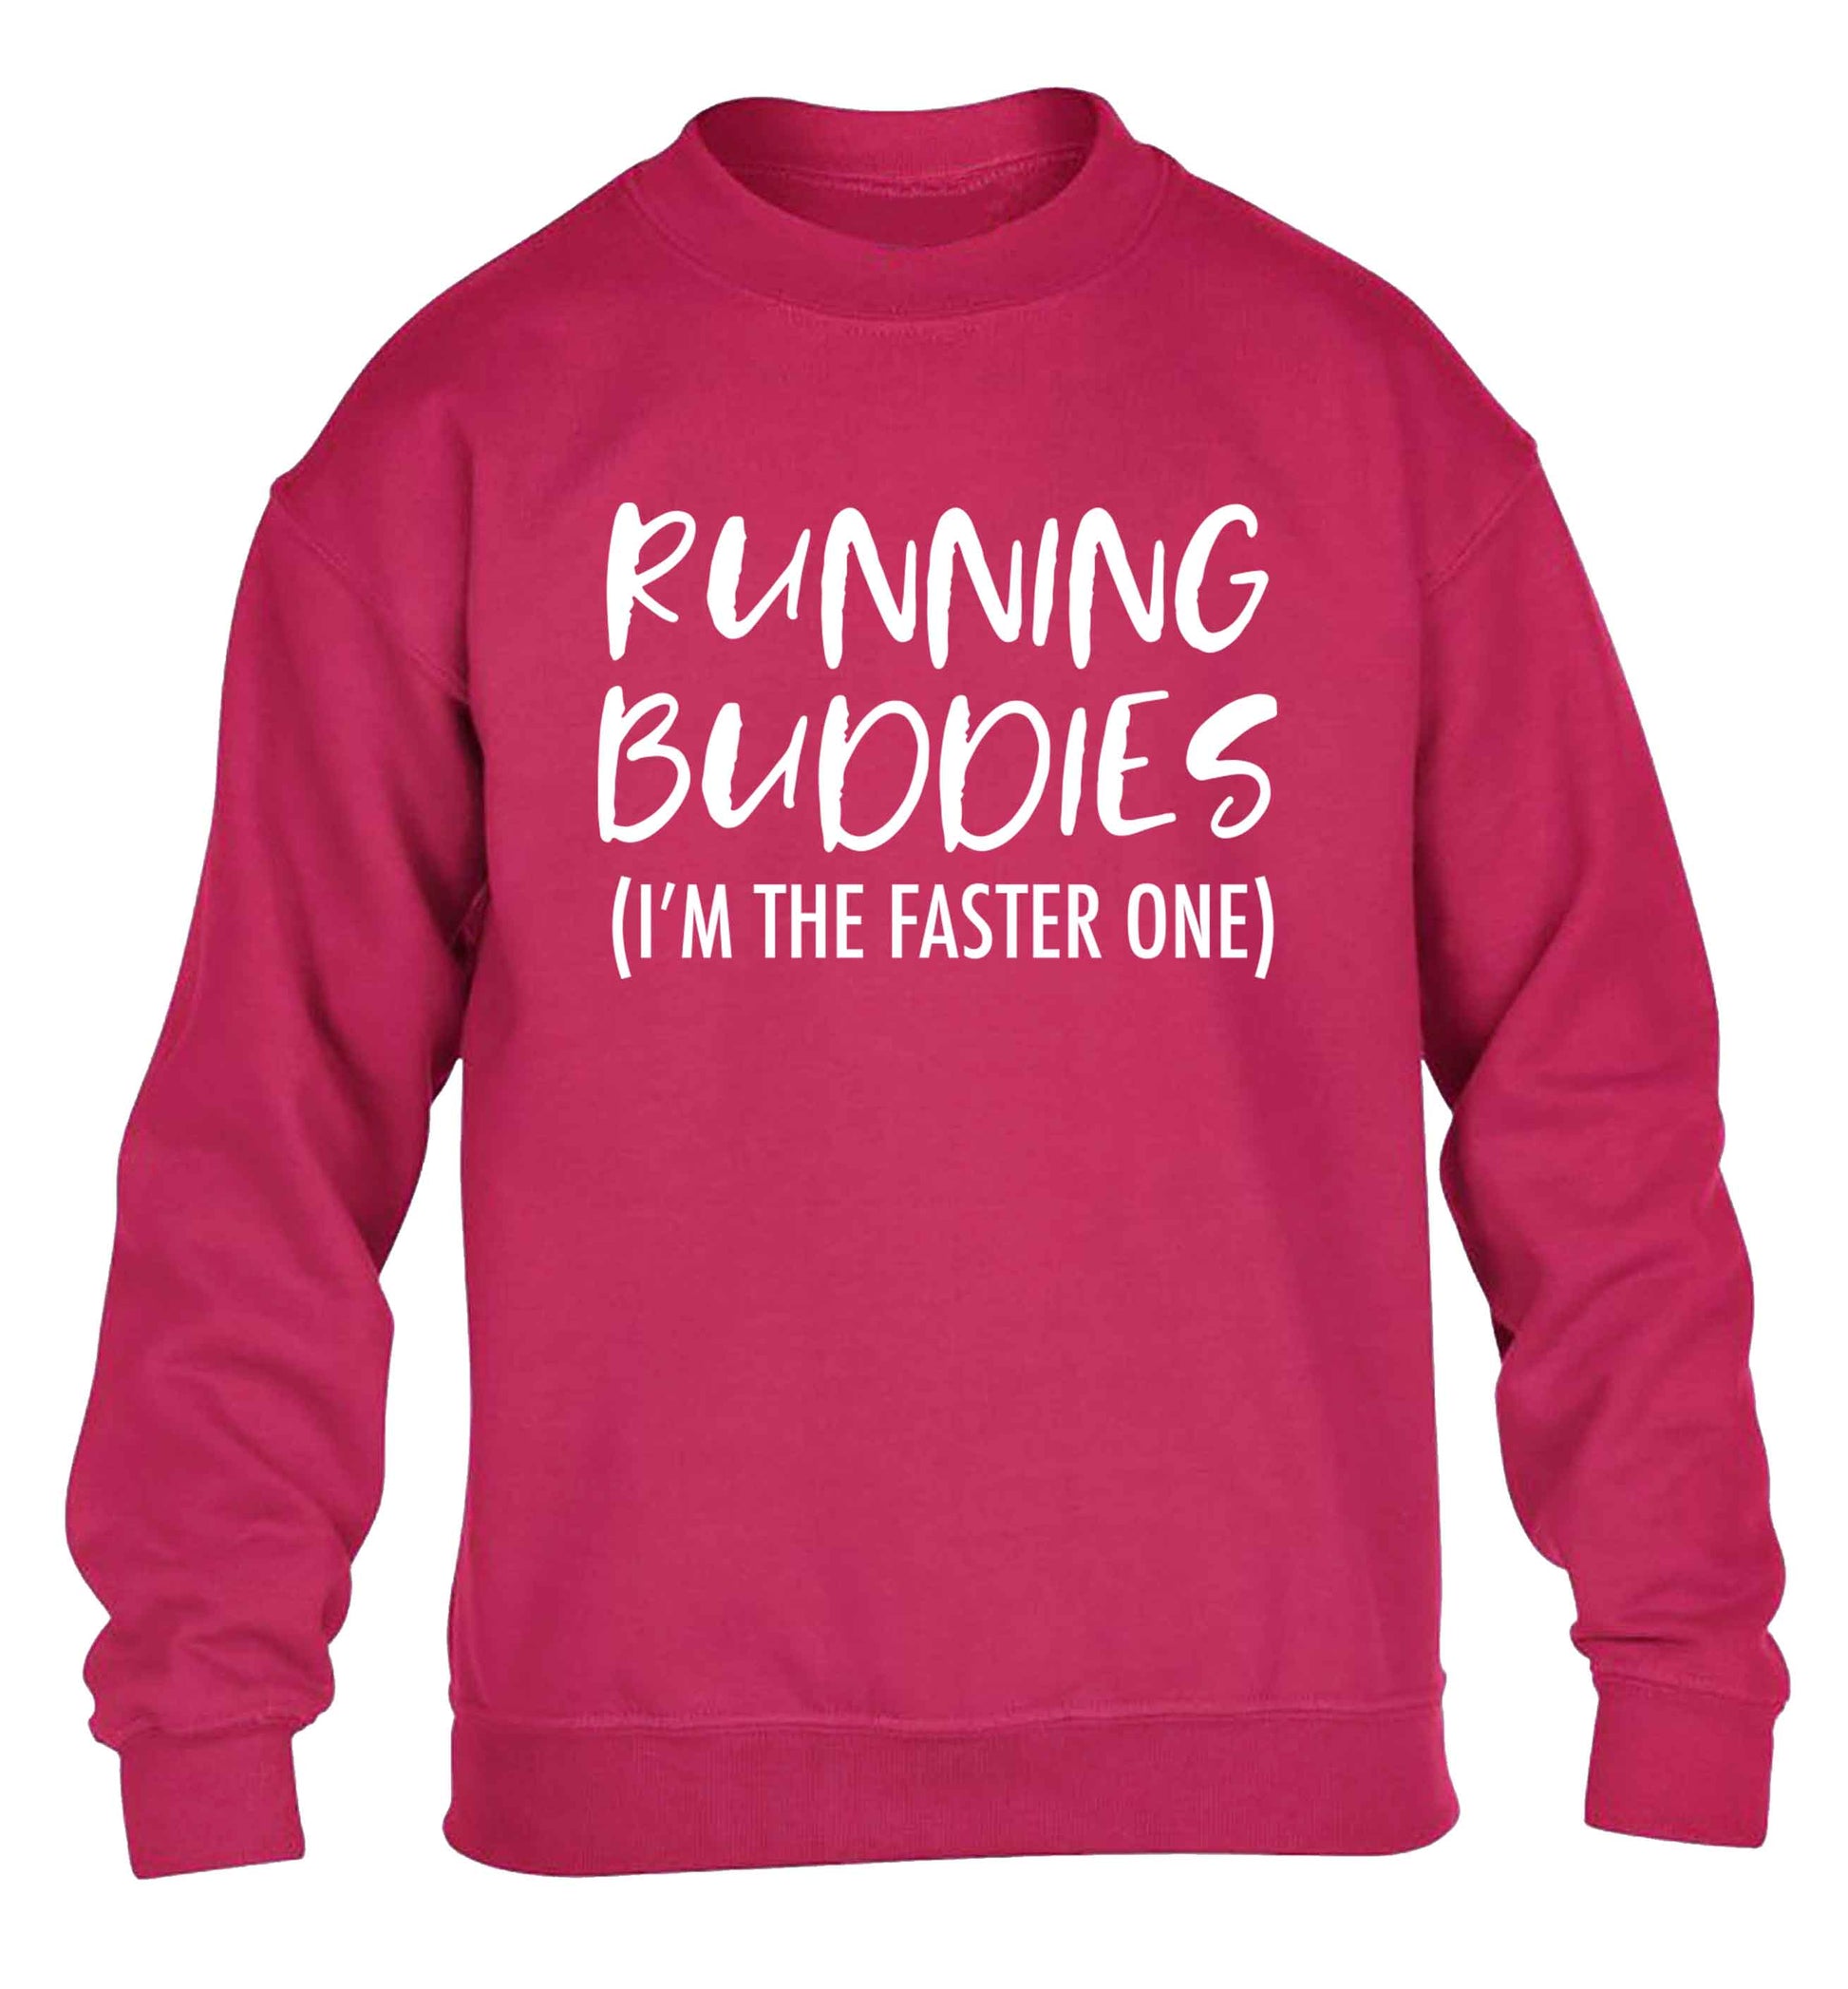 Running buddies (I'm the faster one) children's pink sweater 12-13 Years